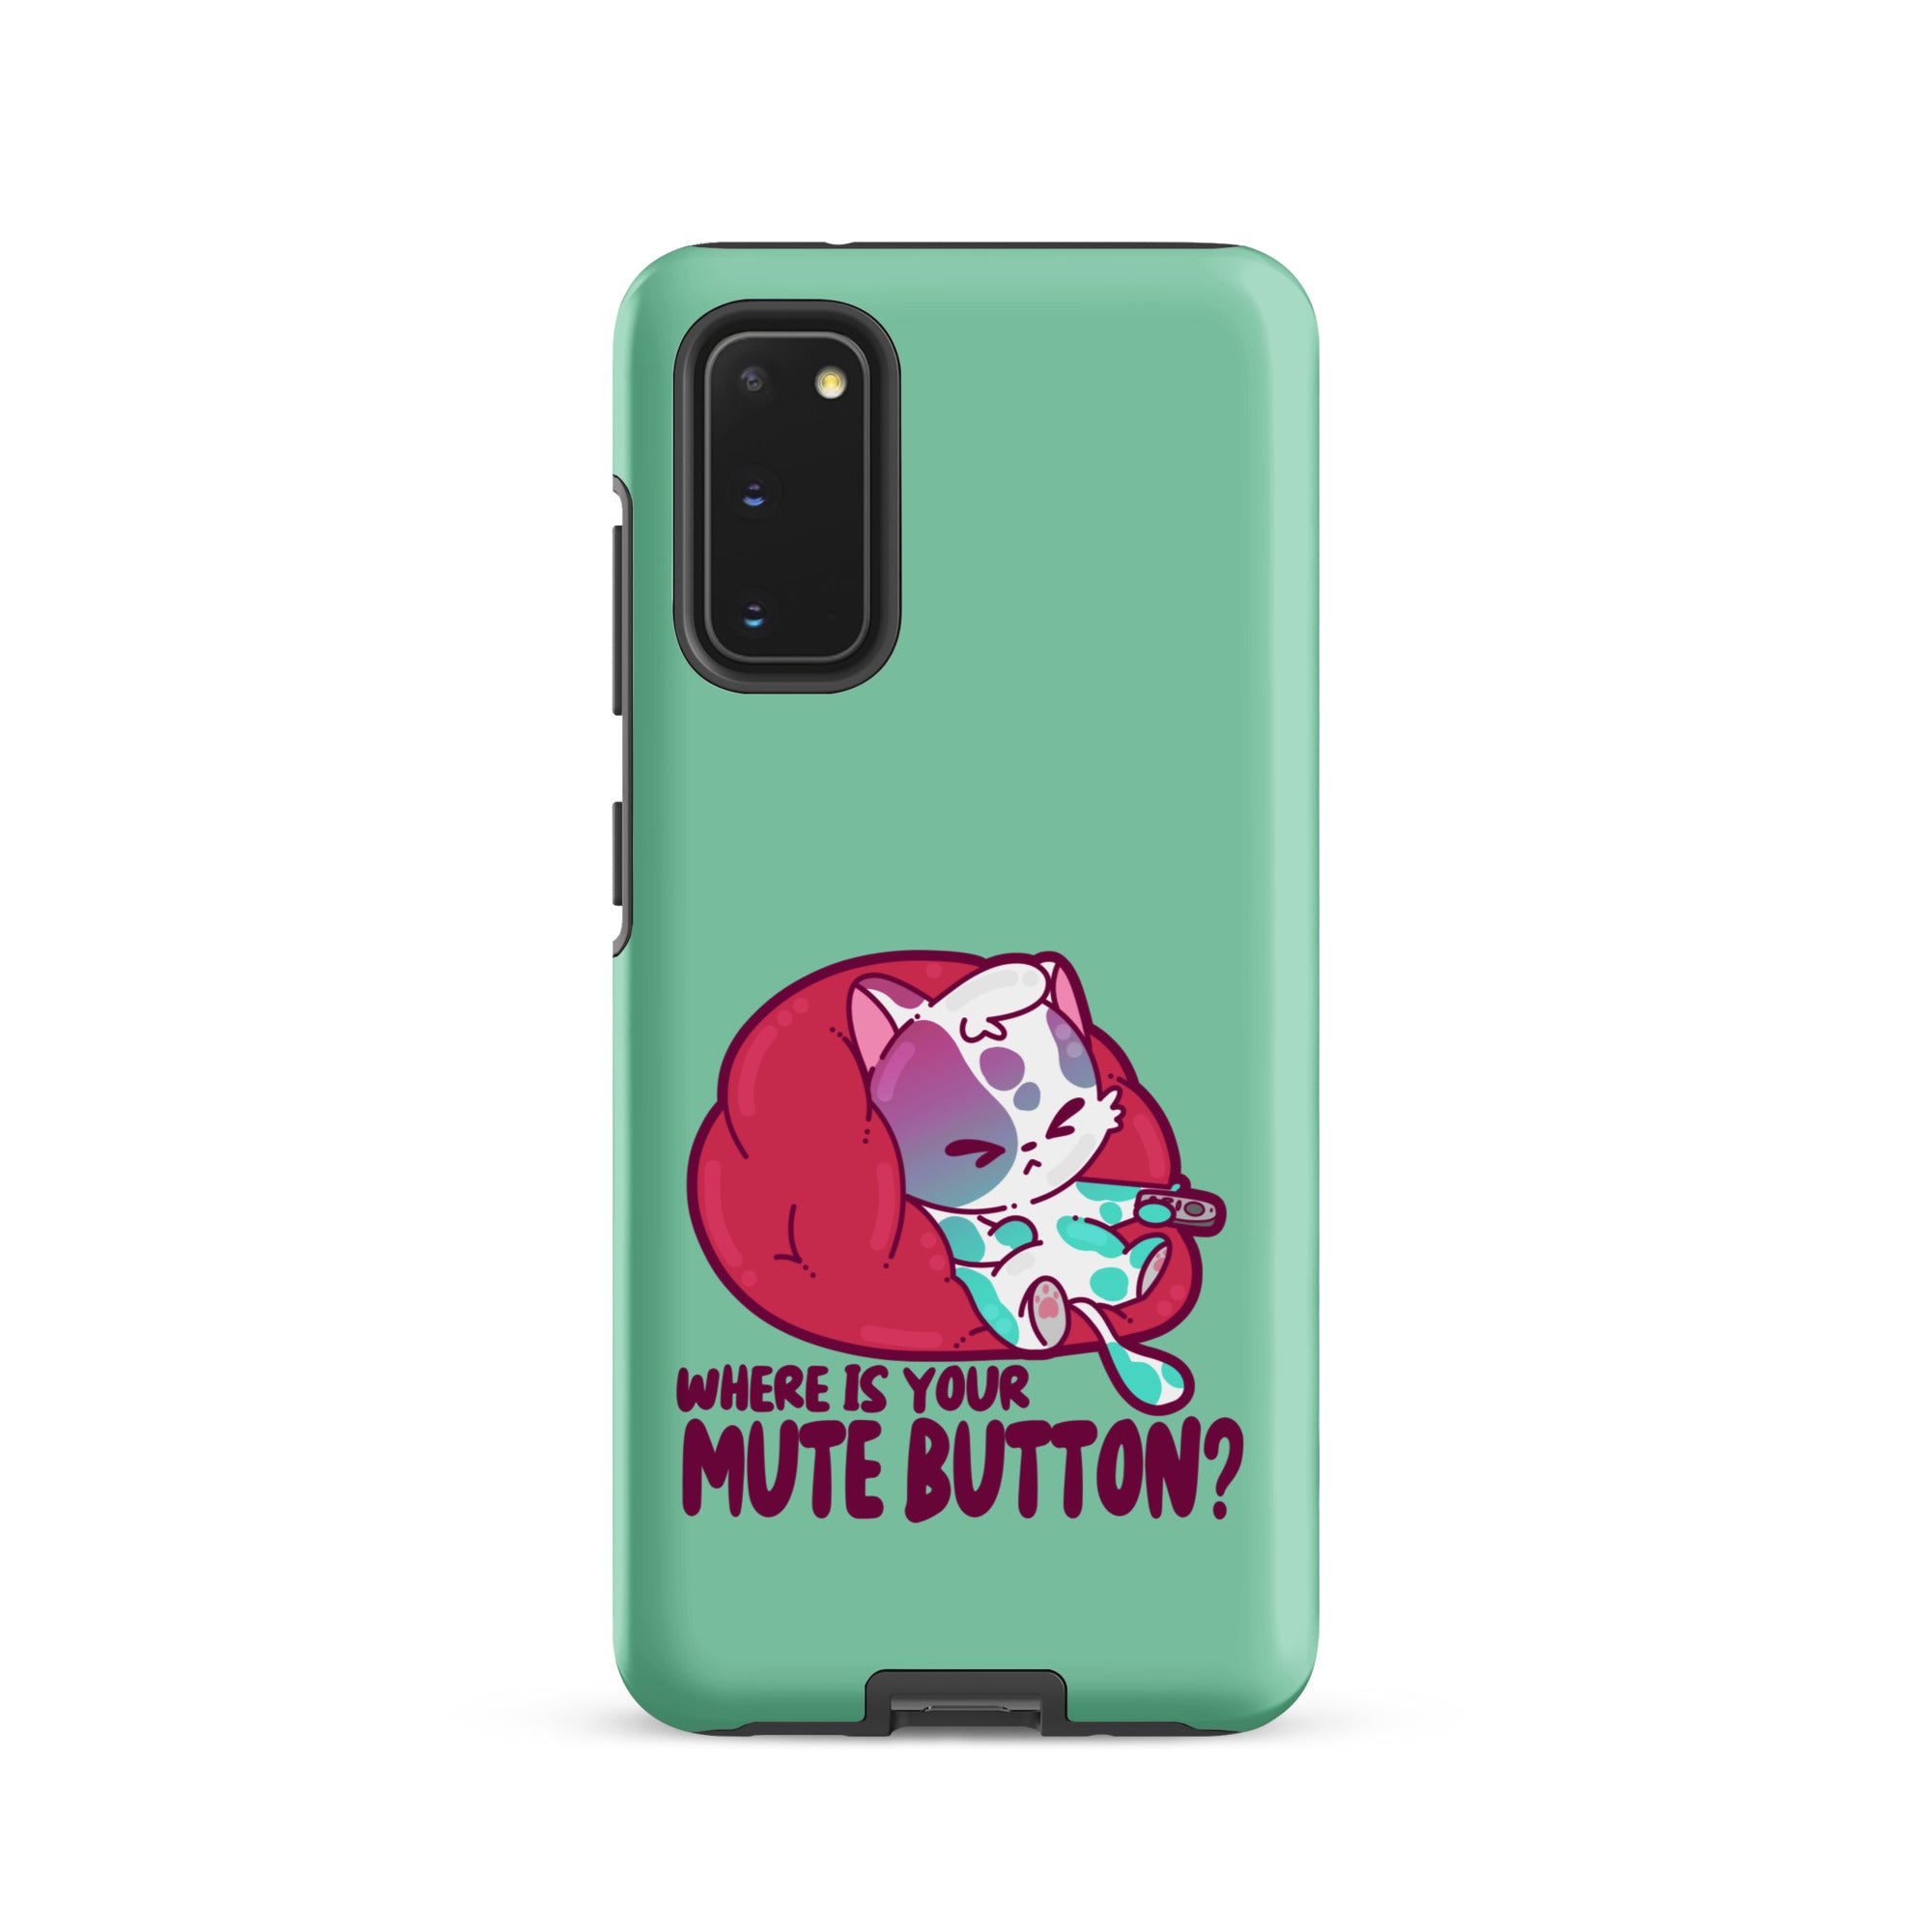 MUTE BUTTON - Tough case for Samsung®